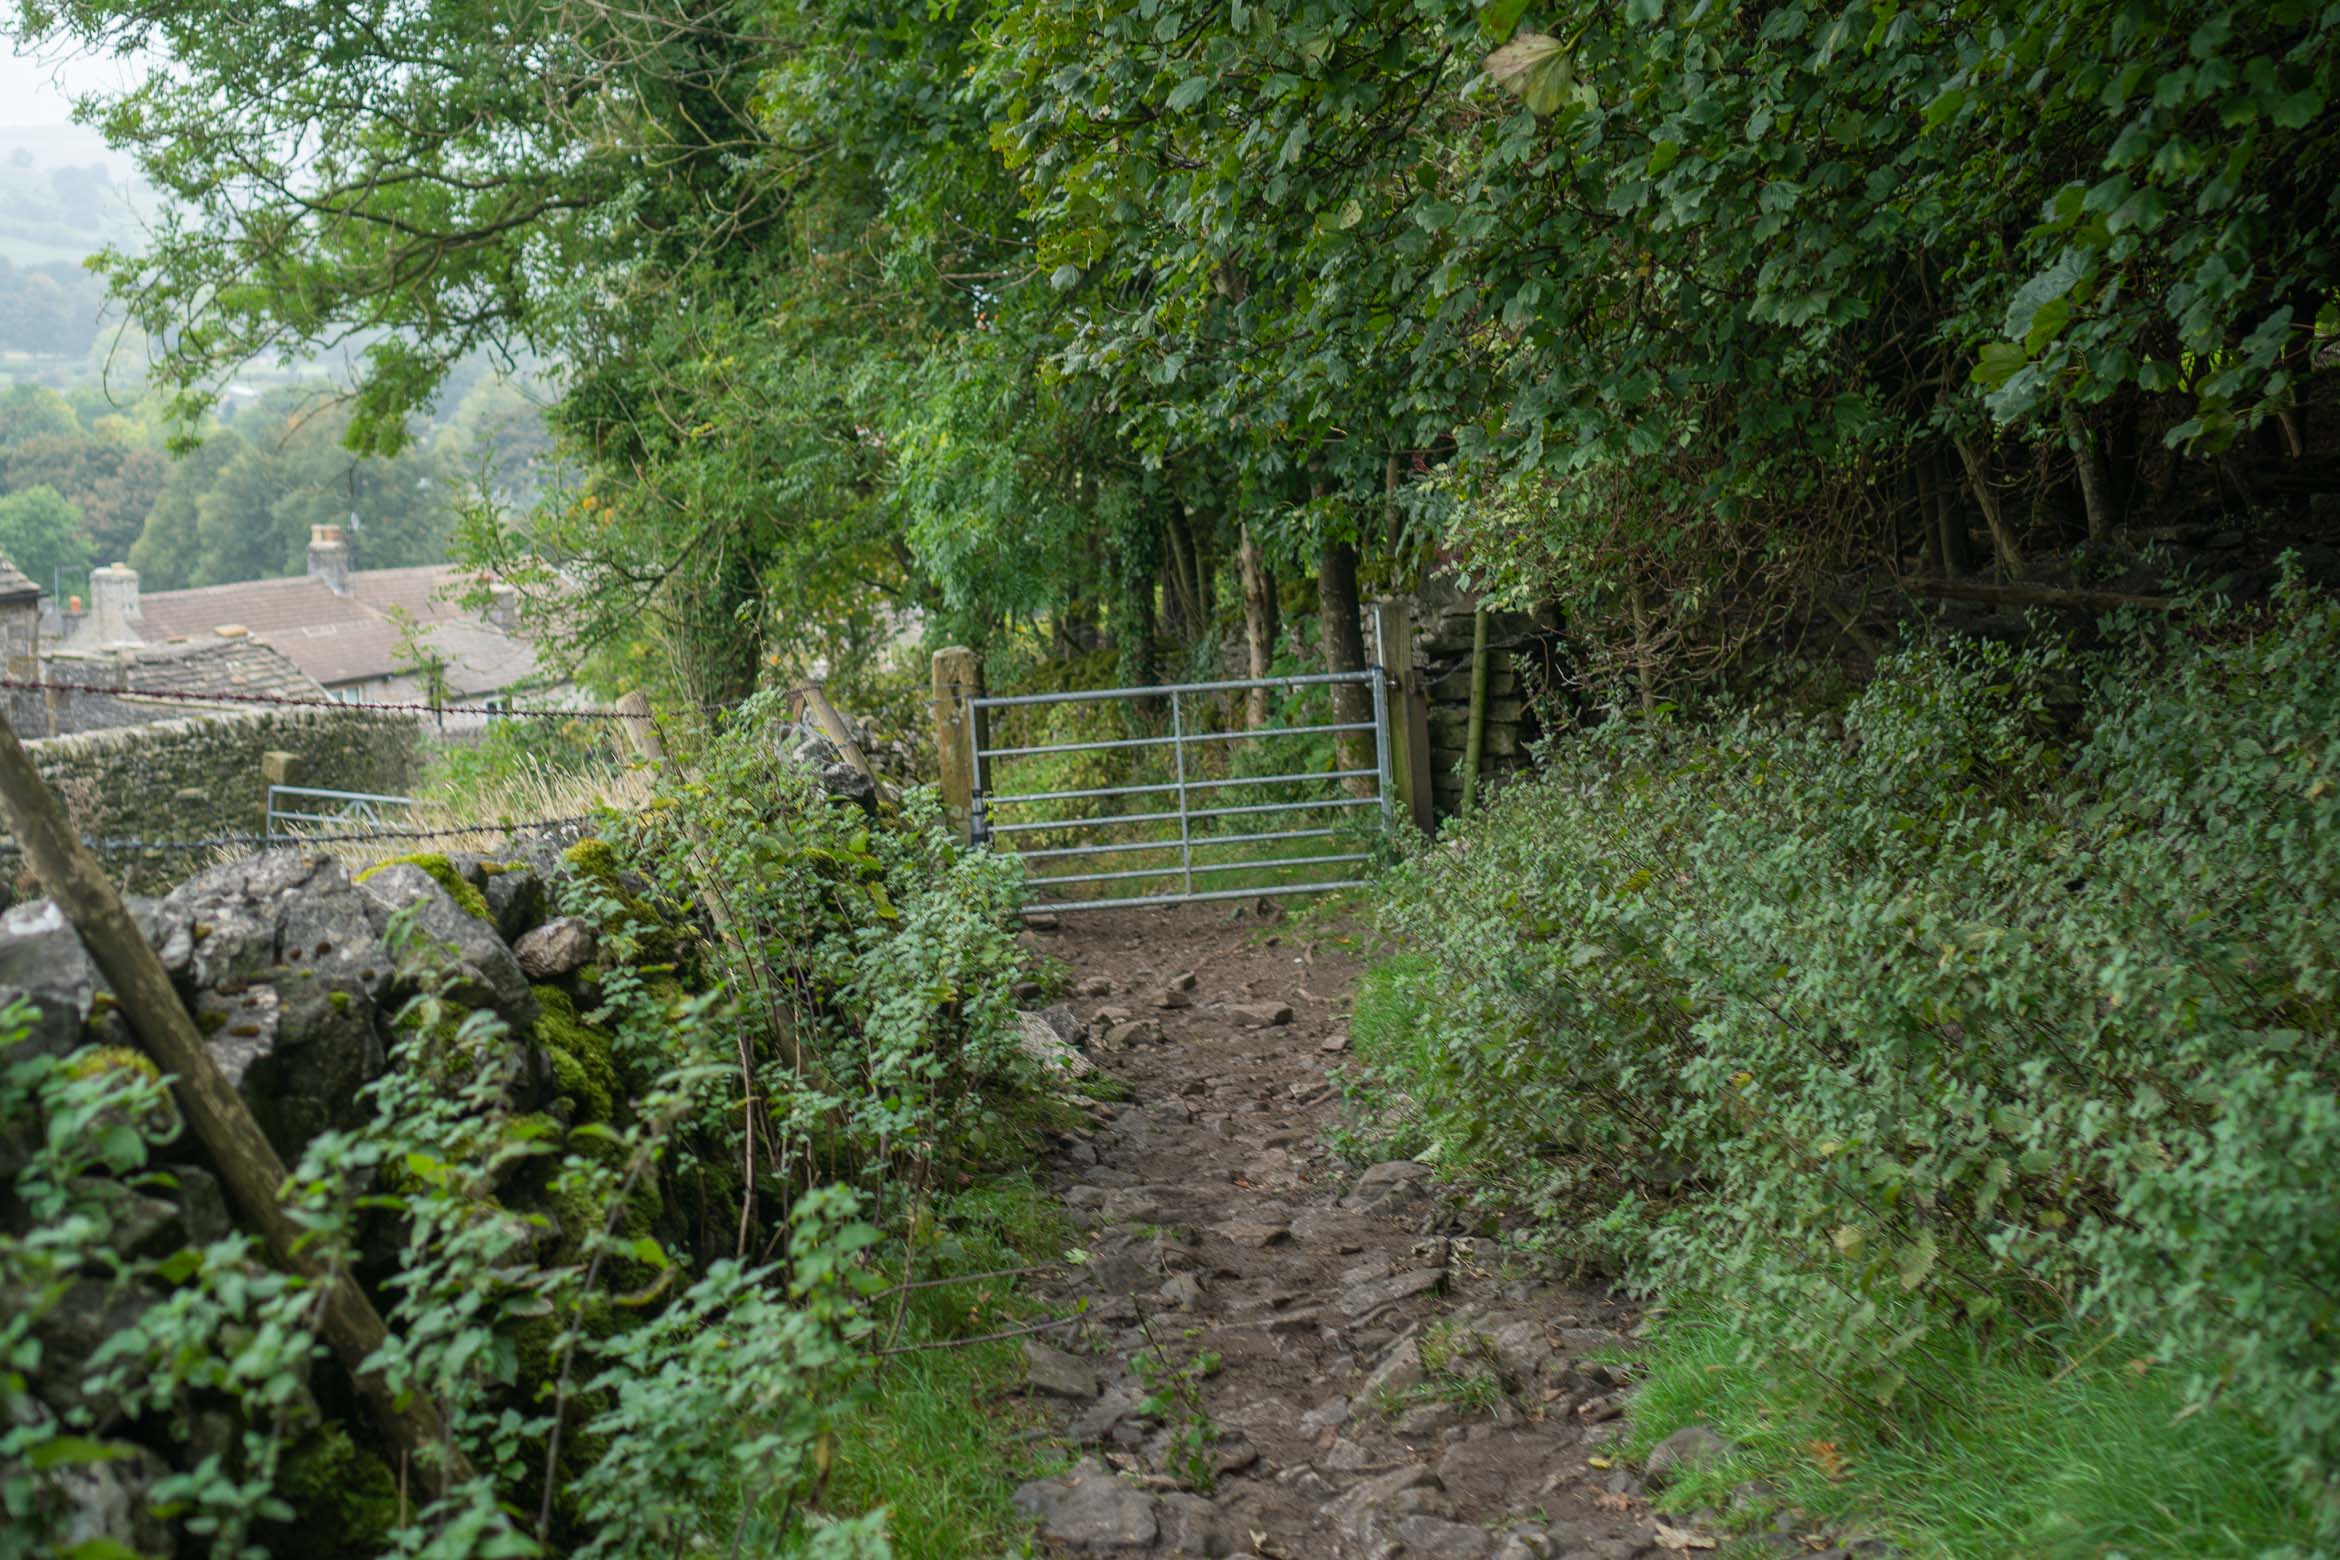 gate and path back to castleton village